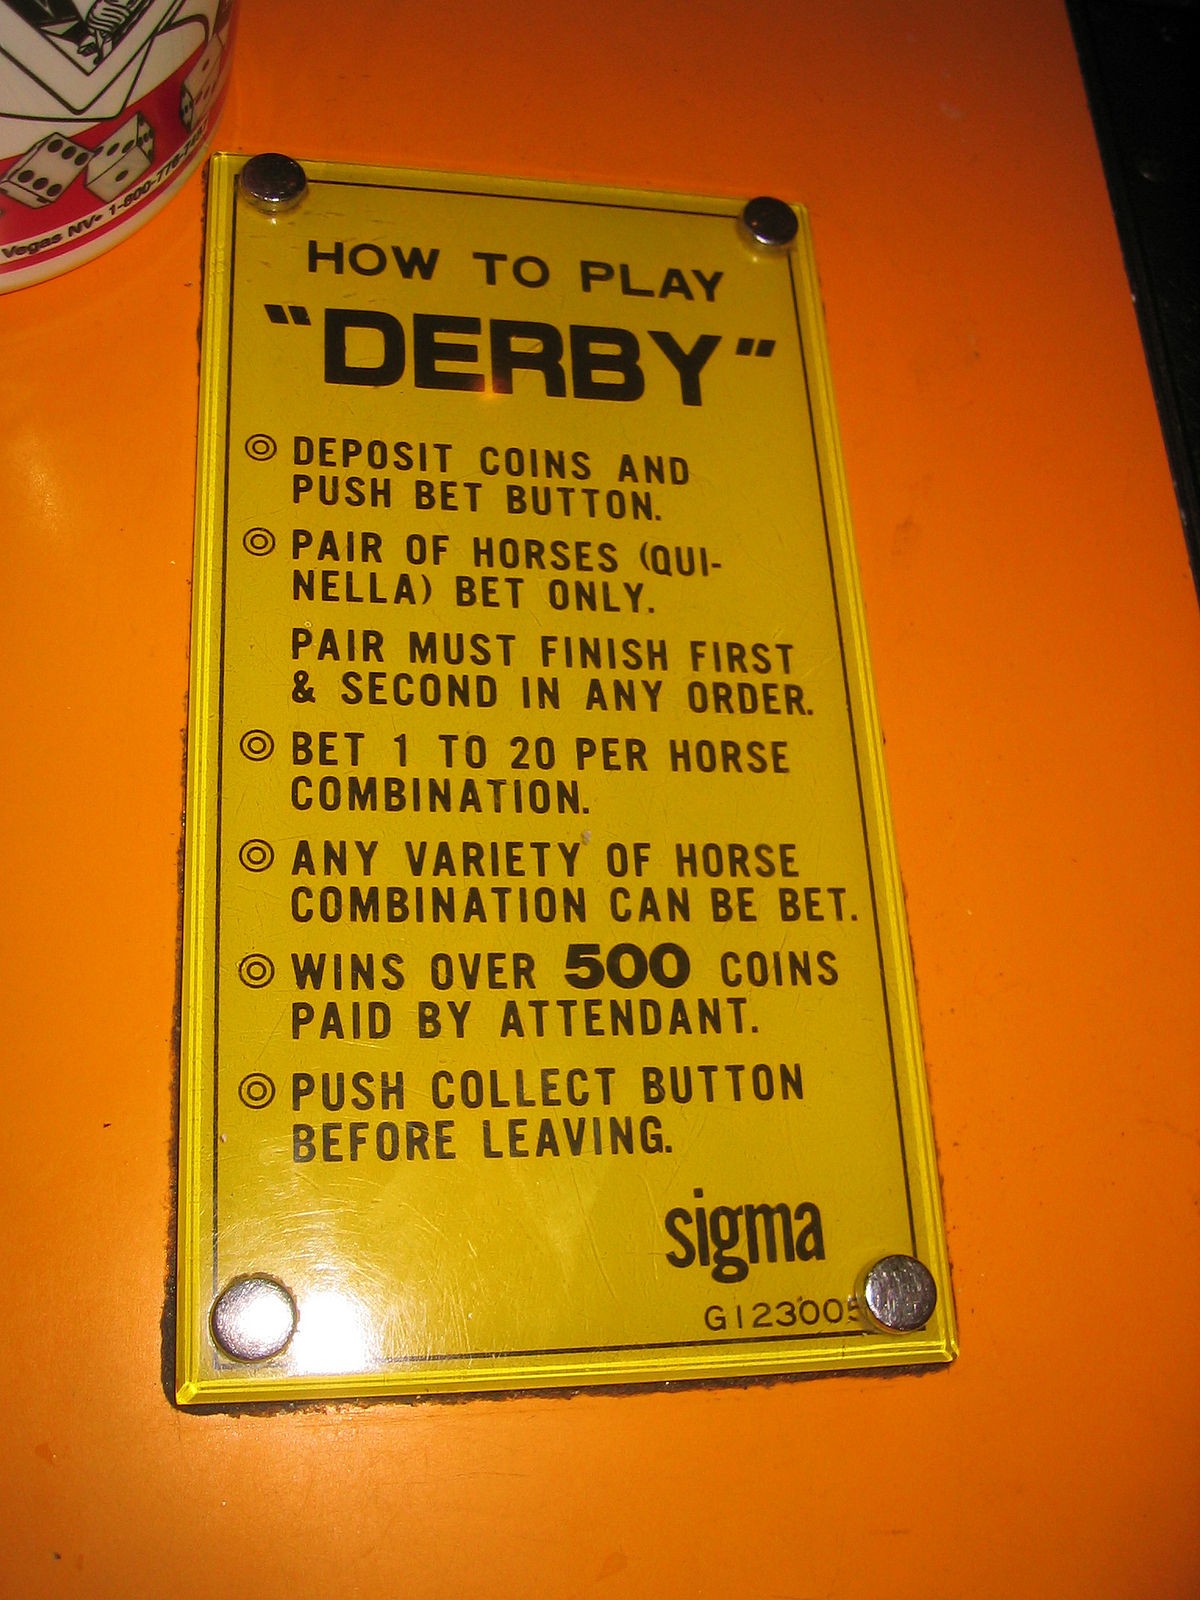 Sigma Derby rules